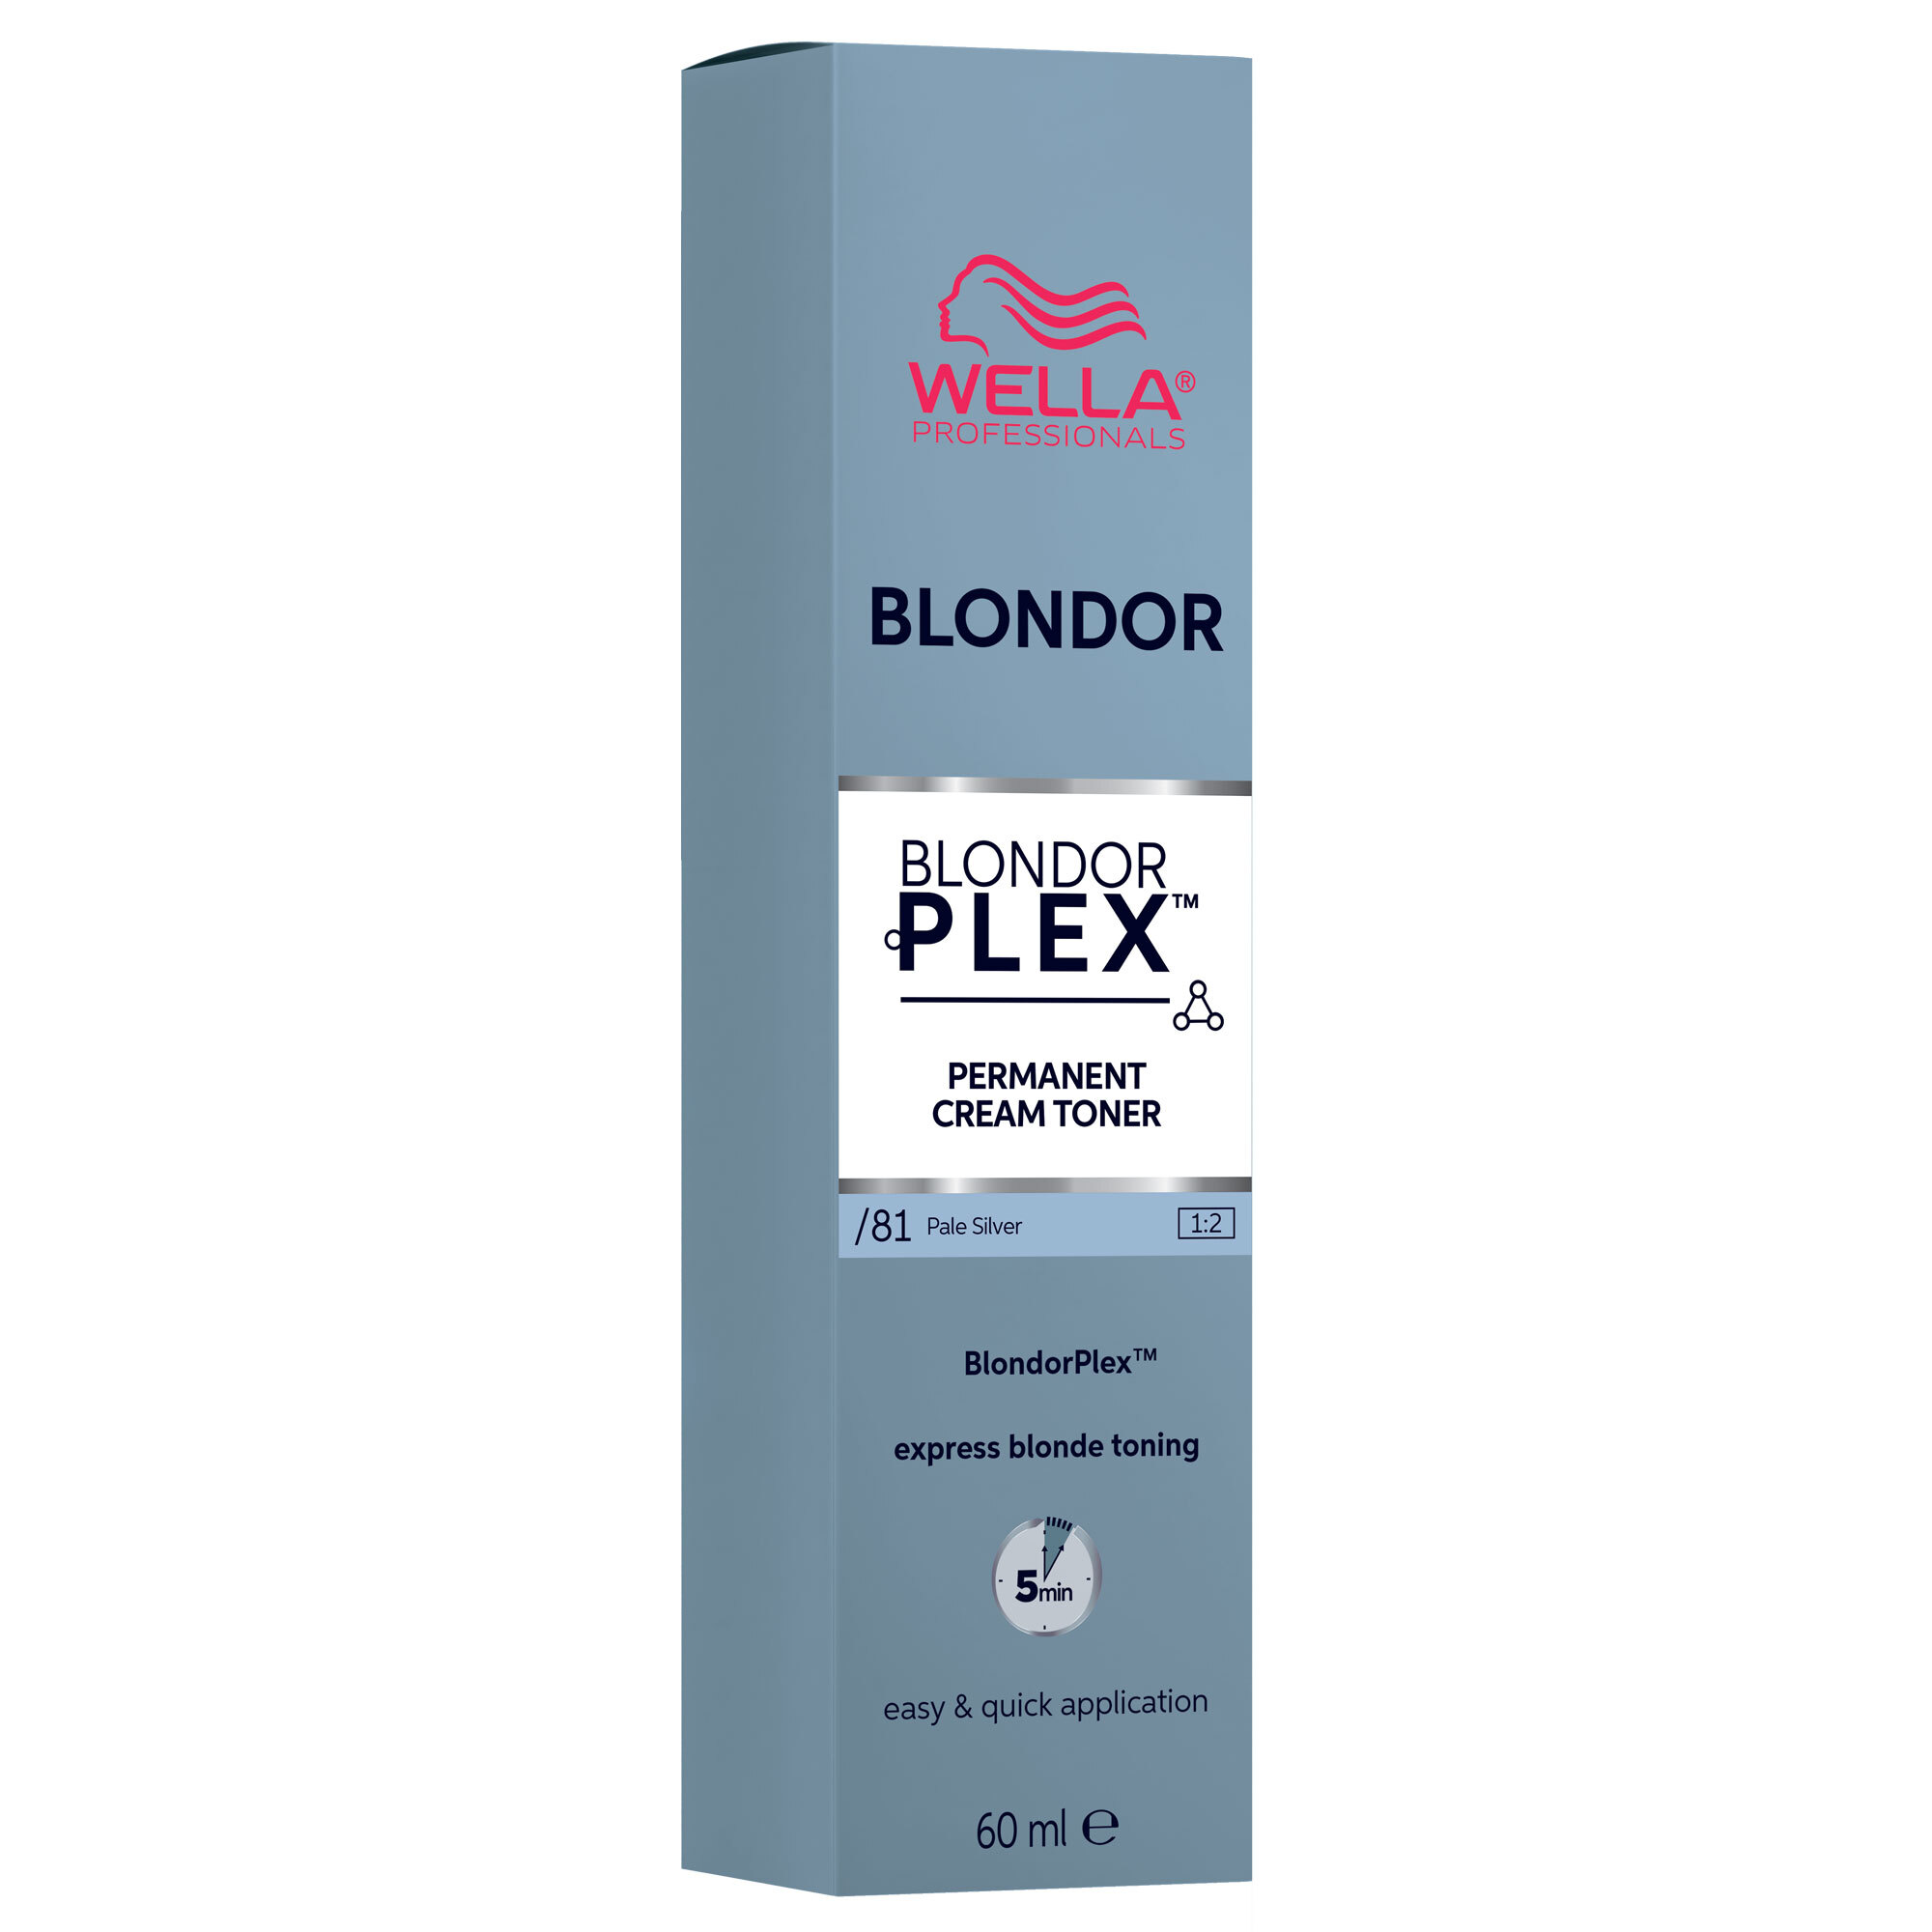 Wella BlondorPlex Cream Toner Pale Silver /81